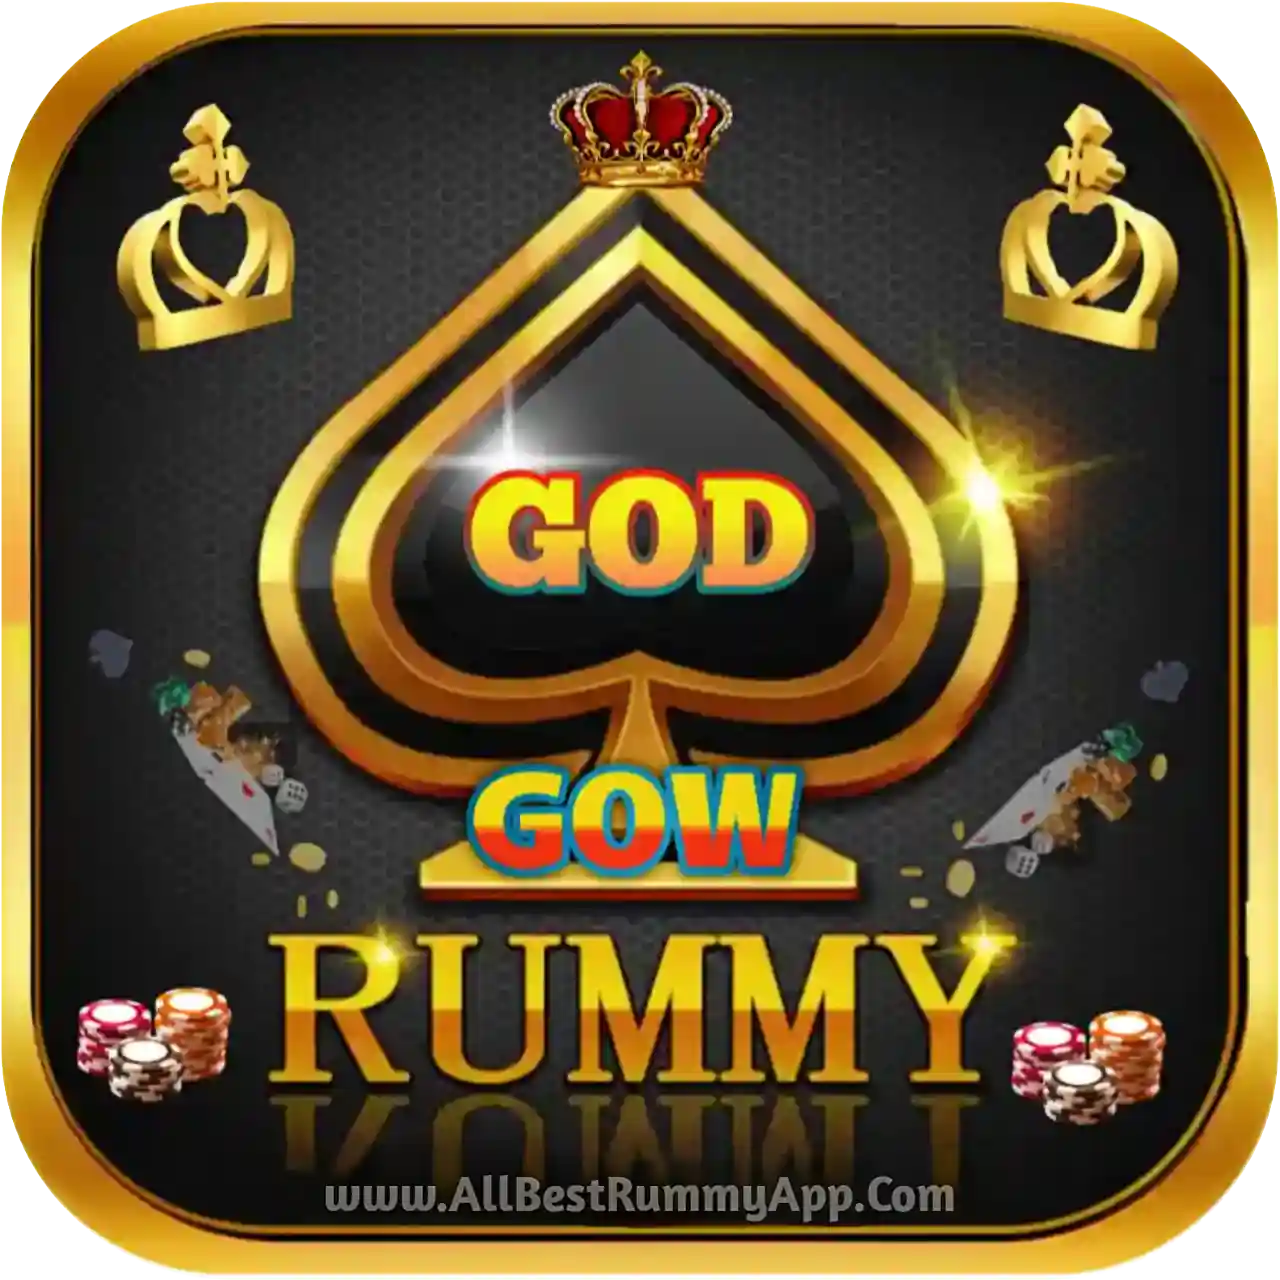 God Cow Rummy - India Rummy APk